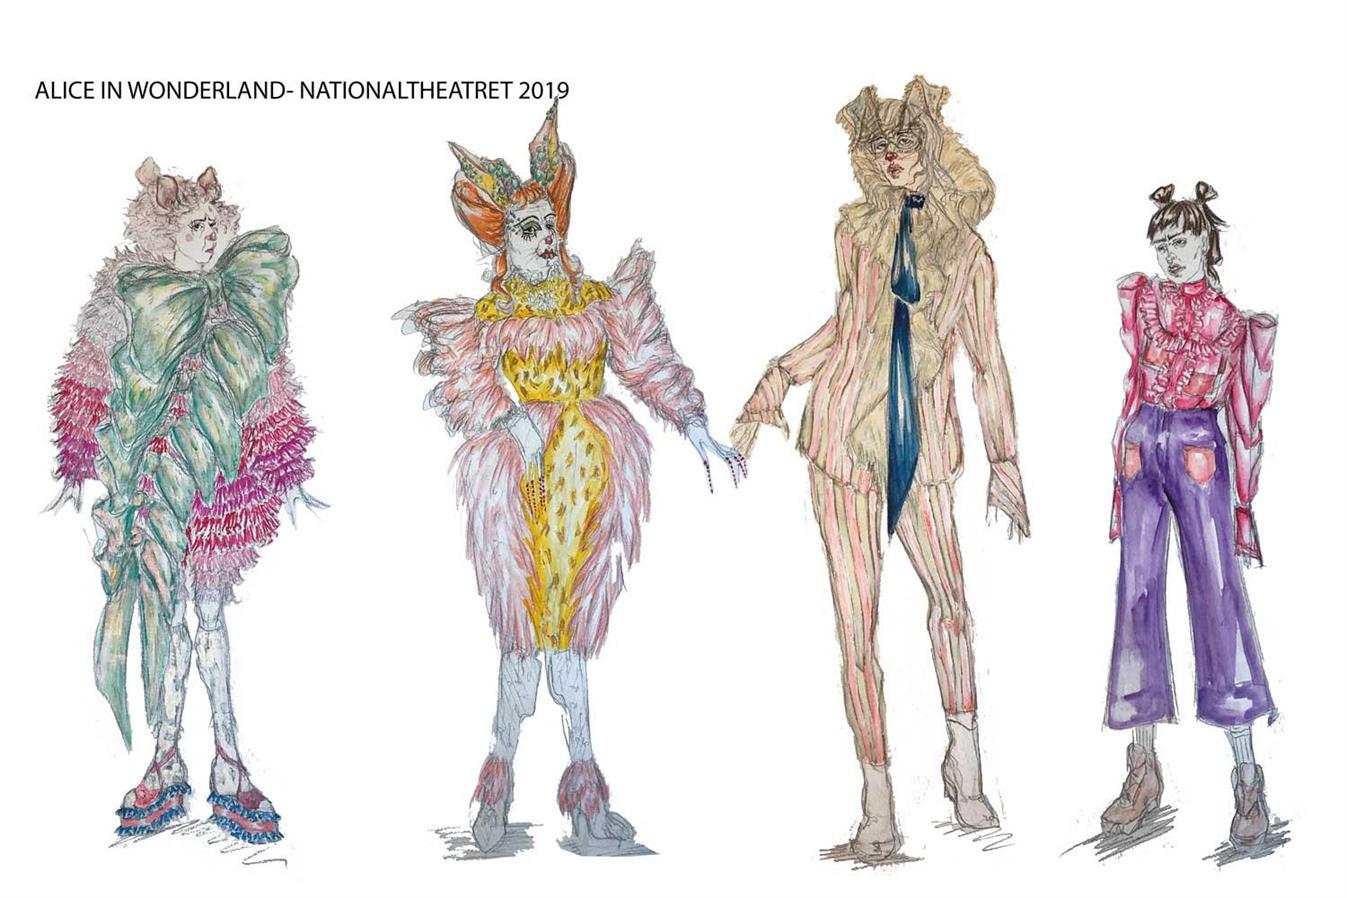 Alice in wonderland - Nationaltheatret- Director: Mads Bones - 2019 - Costume Design: Christina Lovery 